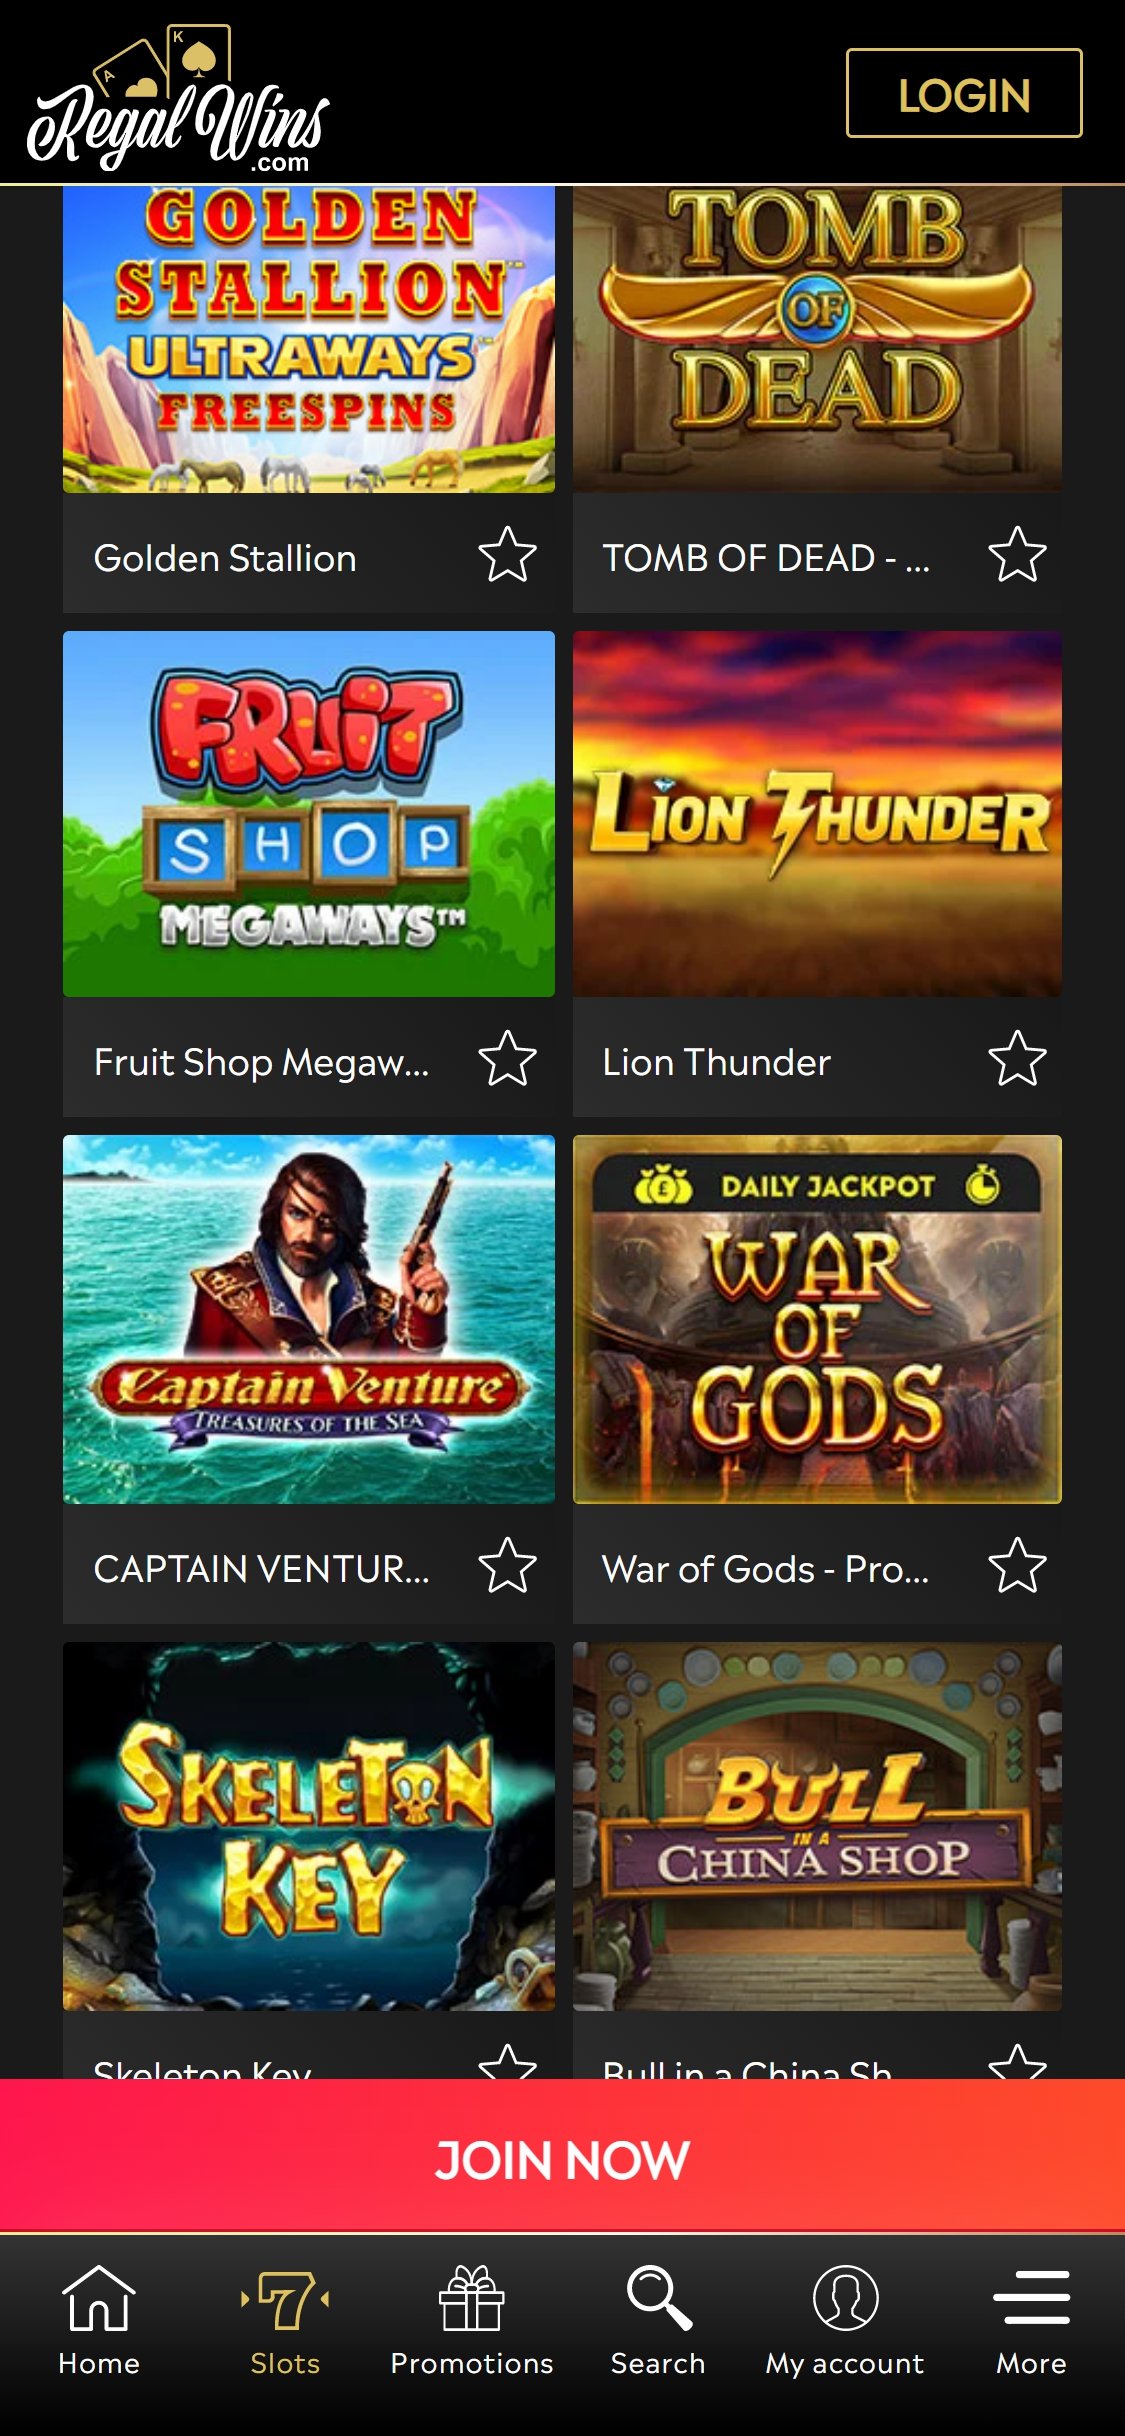 Regal Wins Casino Mobile Games Review